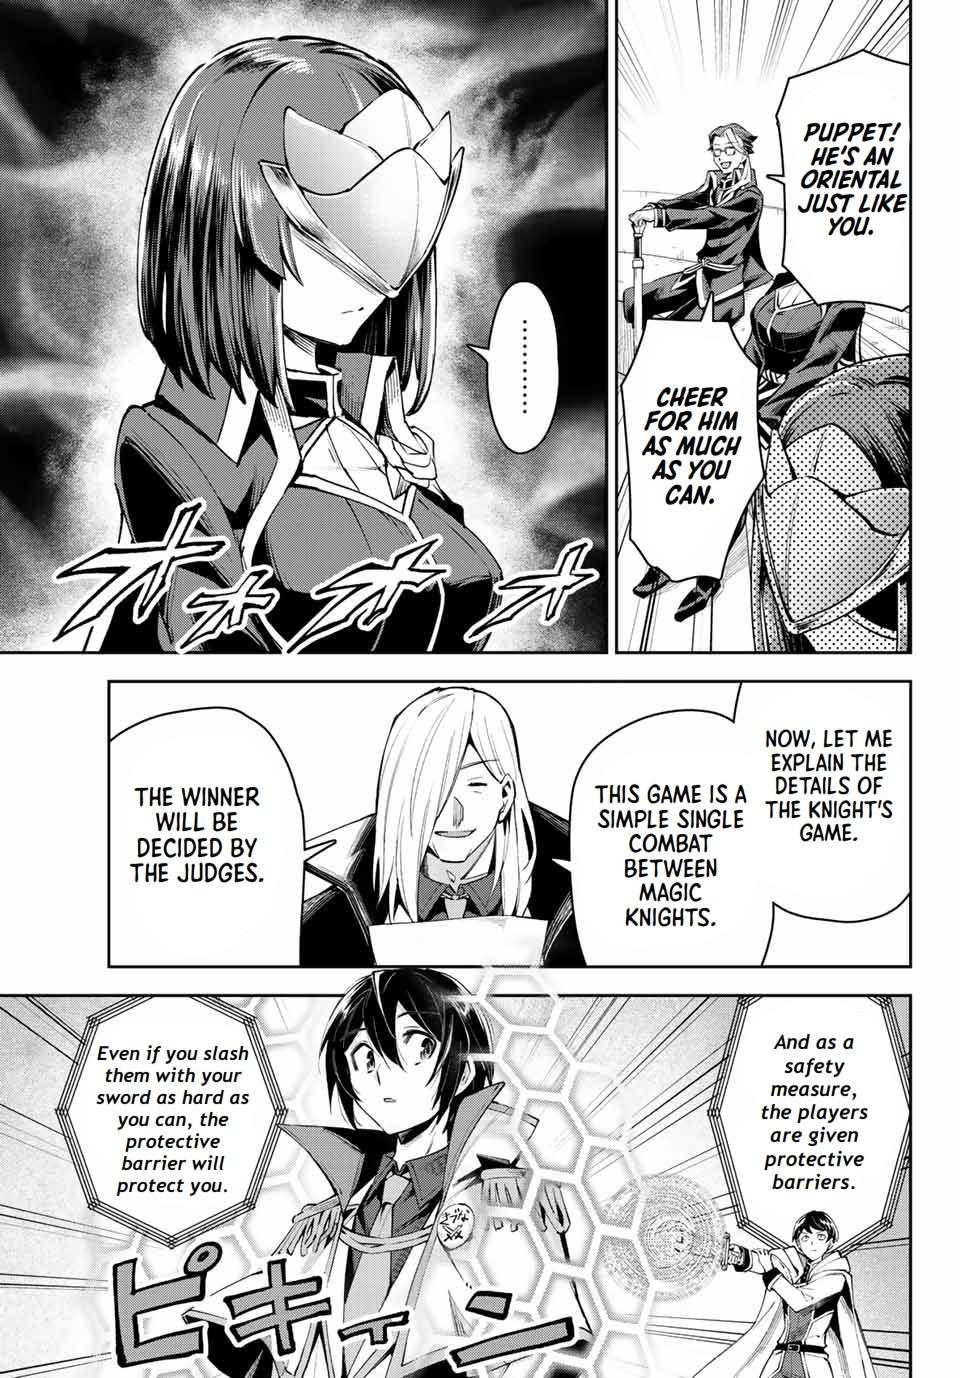 Knights & Magic manga - Mangago